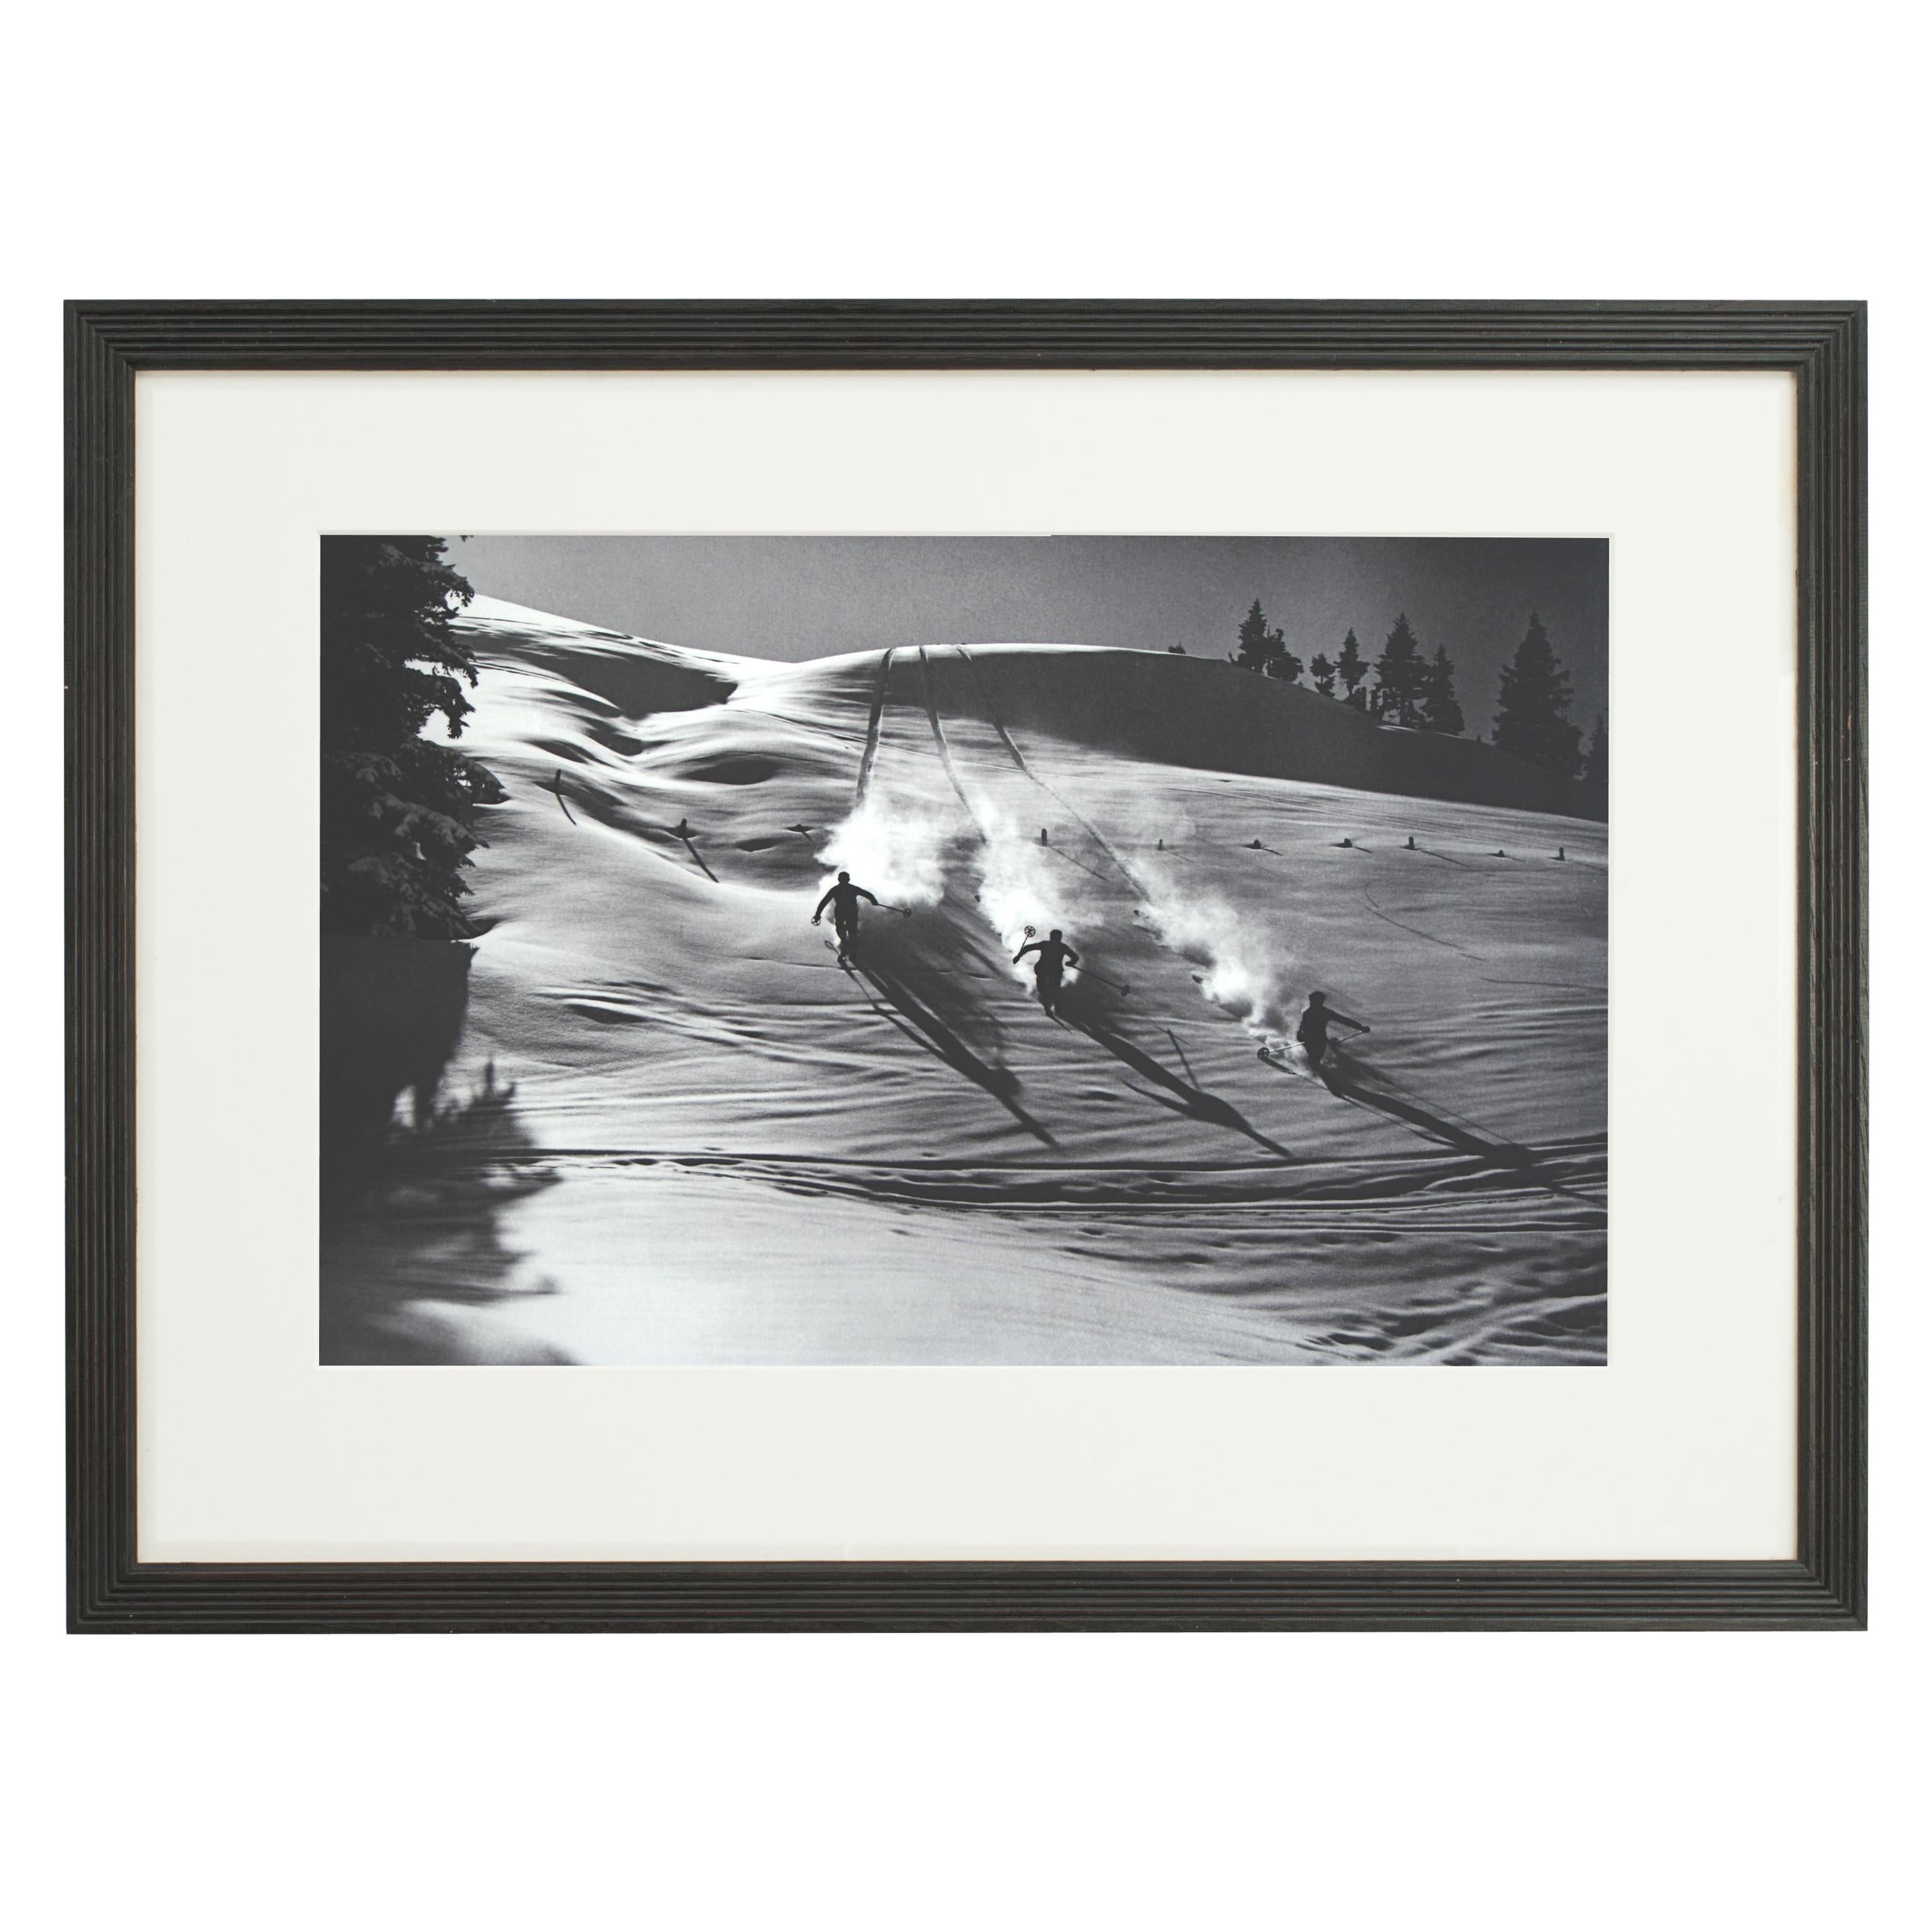 Alpine Ski Photograph, 'Descent in Powder' Taken from Original 1930s Photograph 1